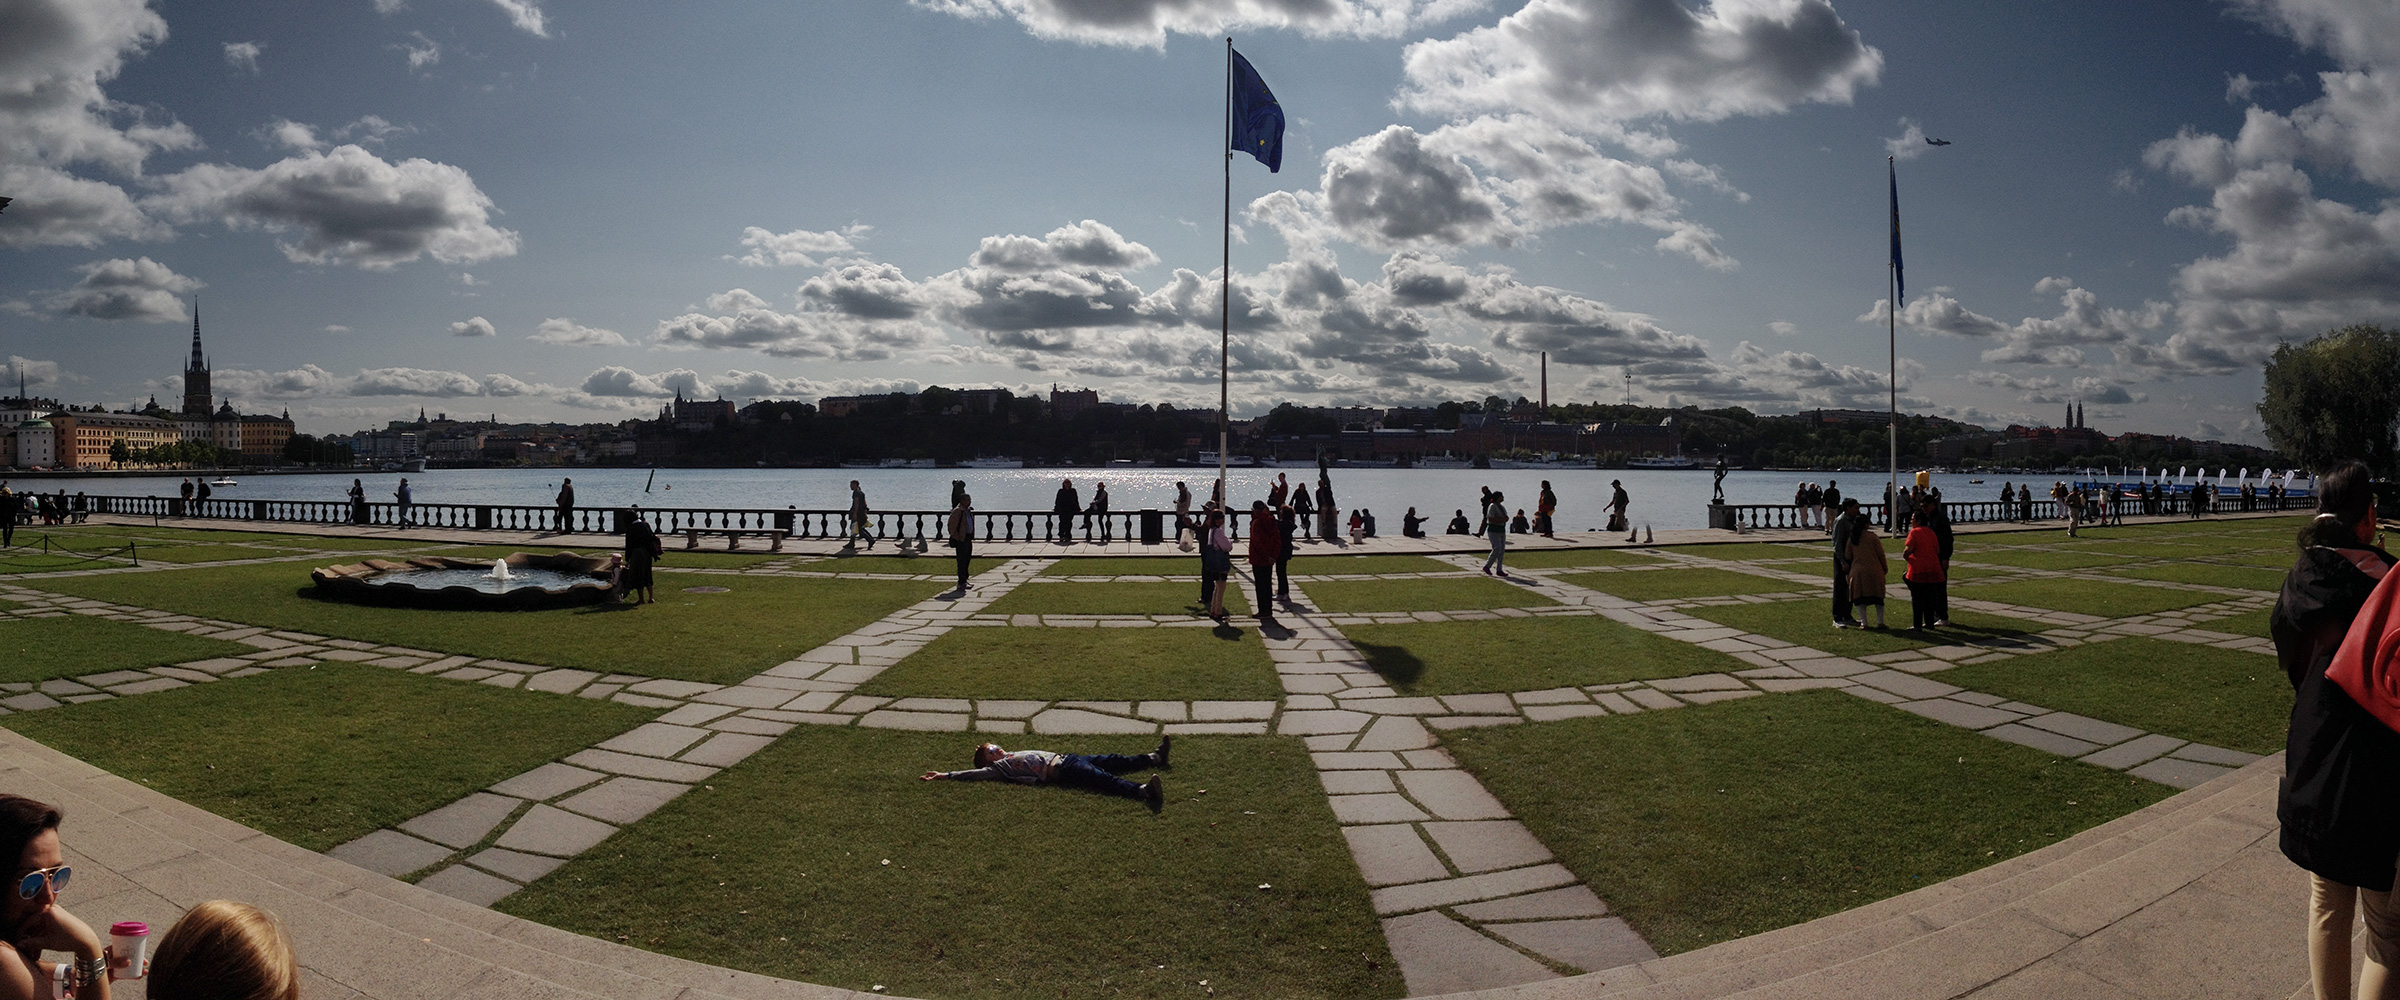 PANORAMA DIARY | Iphoneography blog | Stadshusparken Kungsholmen, Stockholm, Sweden